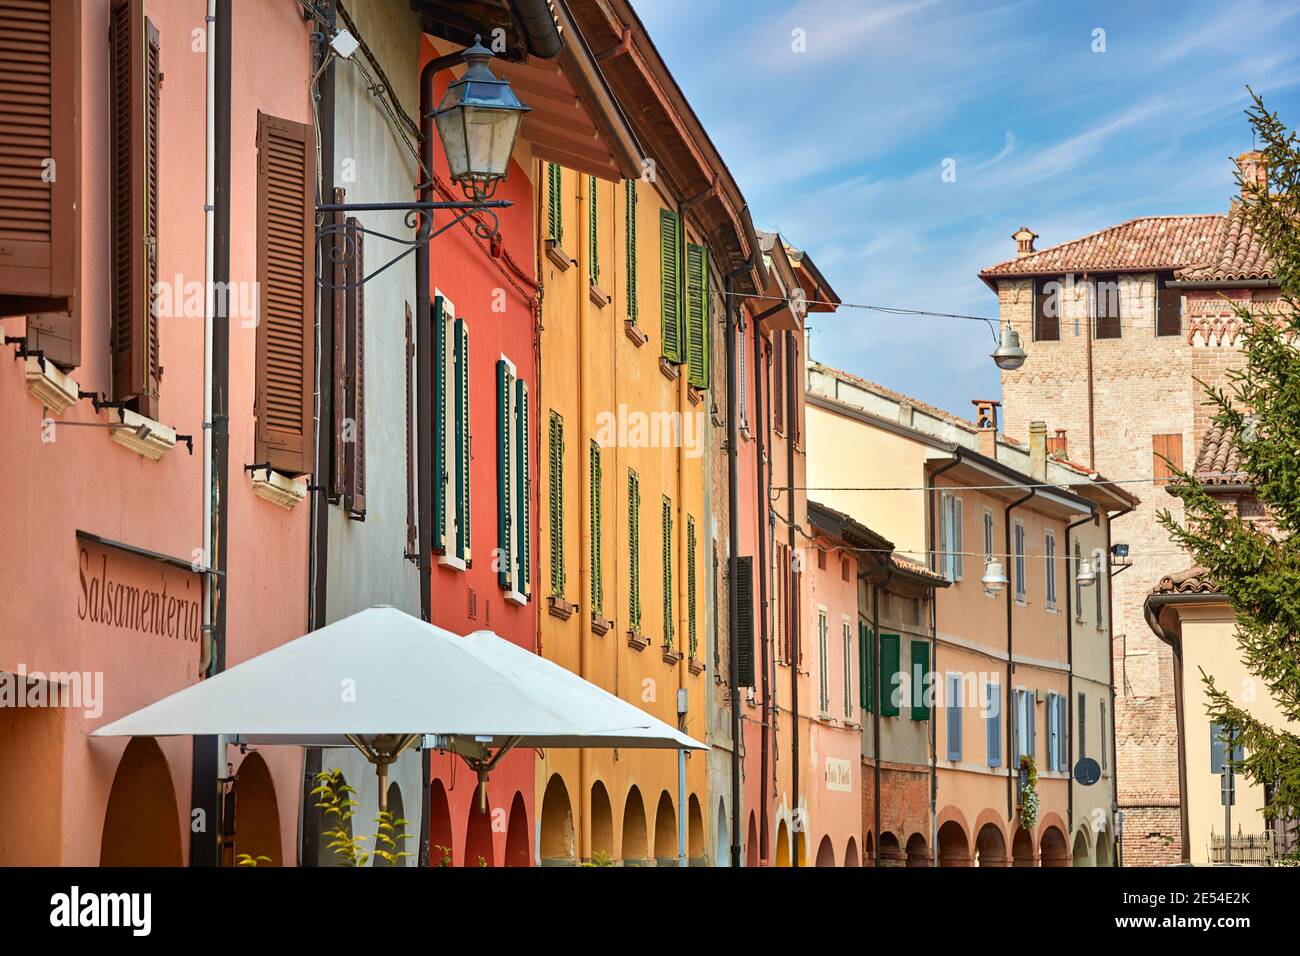 The colorful porticoes of Fontanellato with the Rocca Sanvitale Castle at the bottom, Parma, Italy. Stock Photo